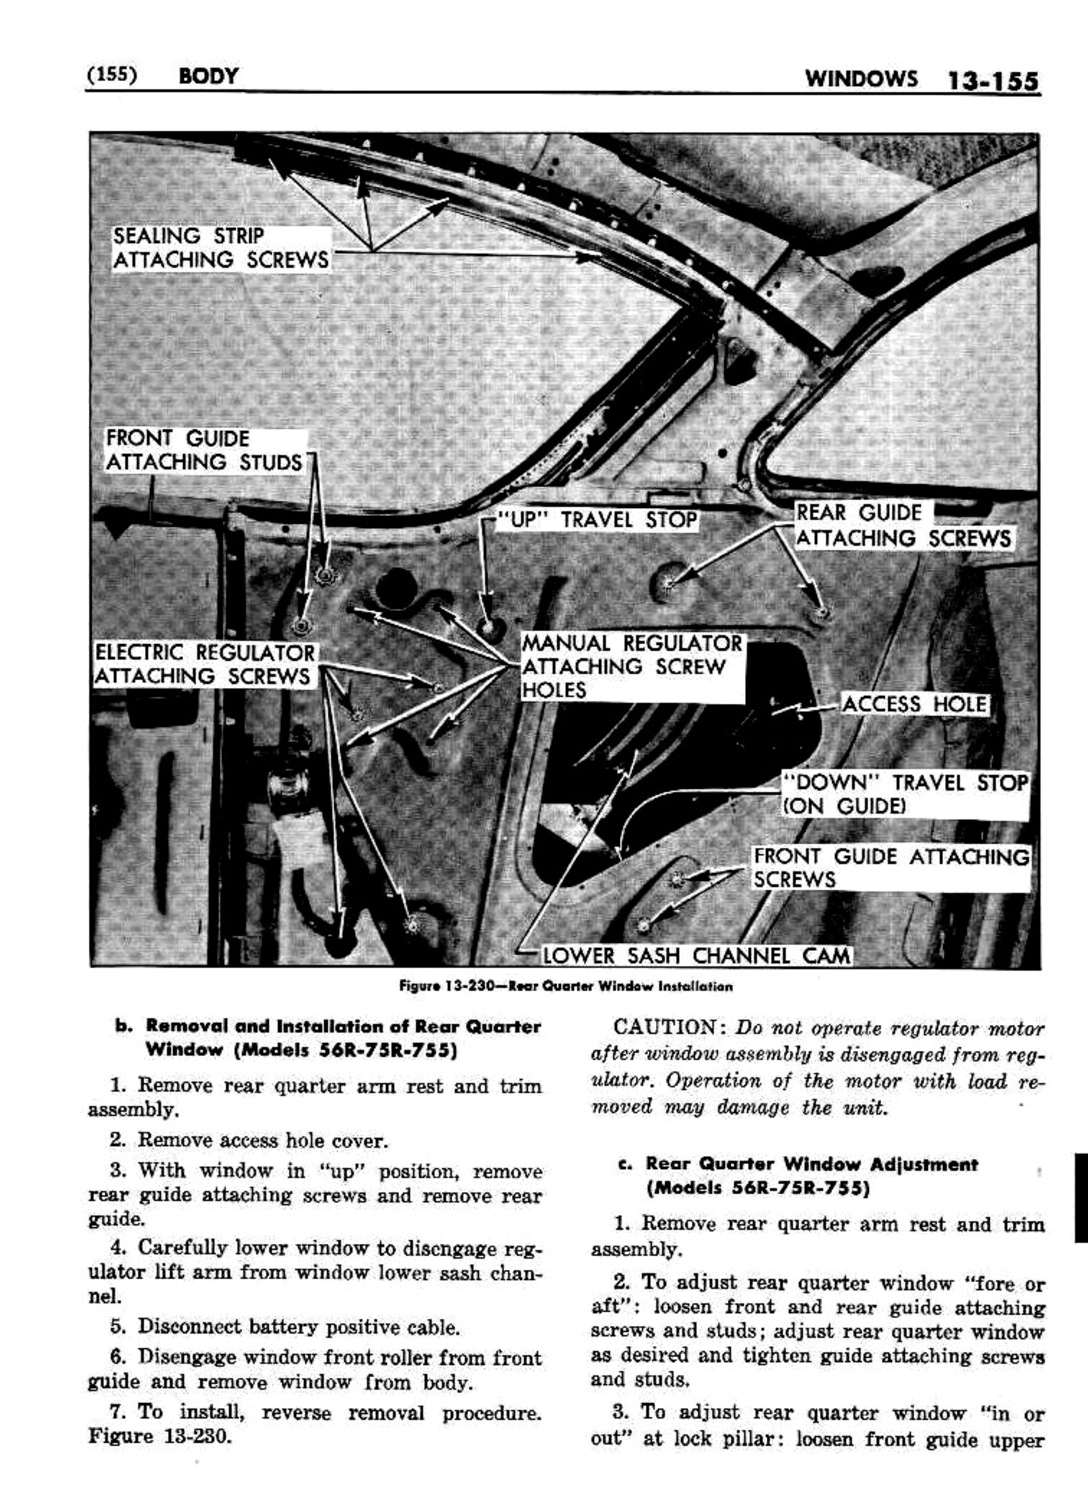 n_1958 Buick Body Service Manual-156-156.jpg